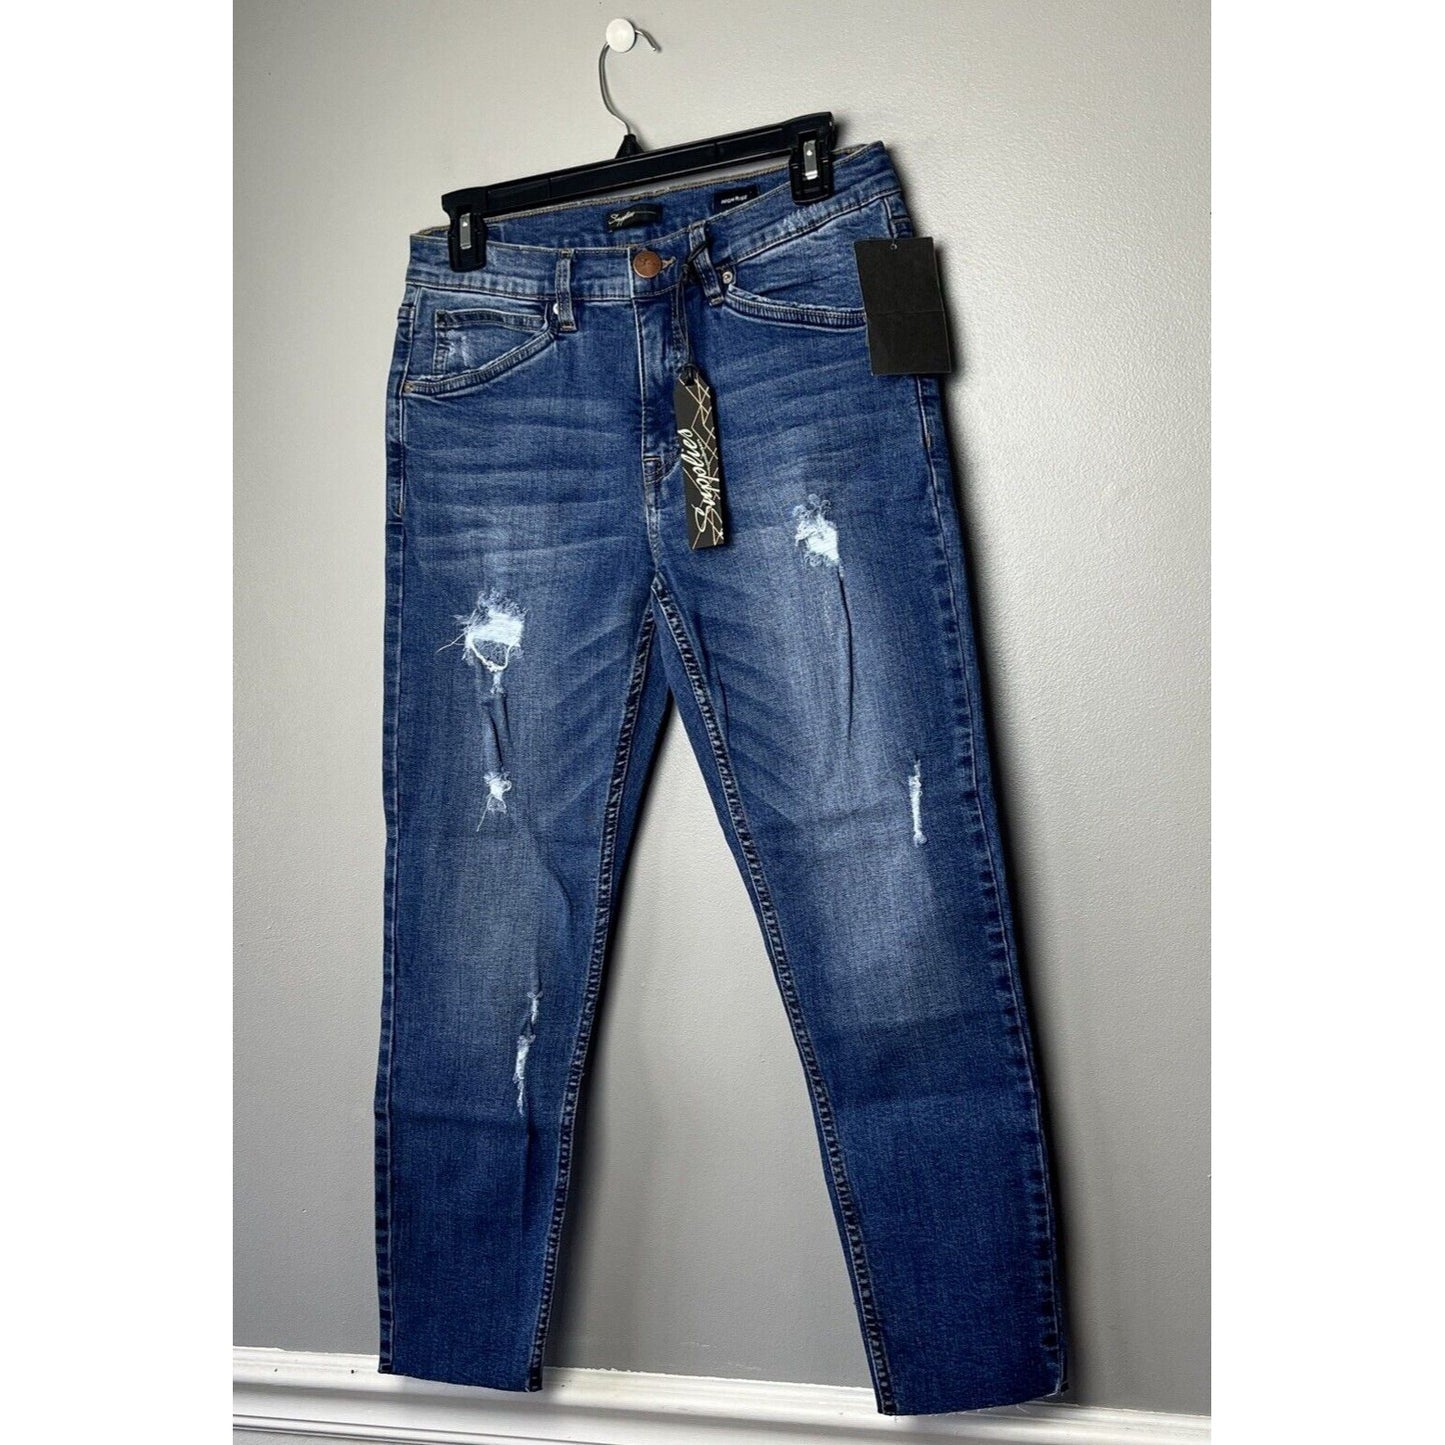 Supplies x Union Bay Maren High Rise Distressed Slim Straight Jeans NWT - Sz 8P